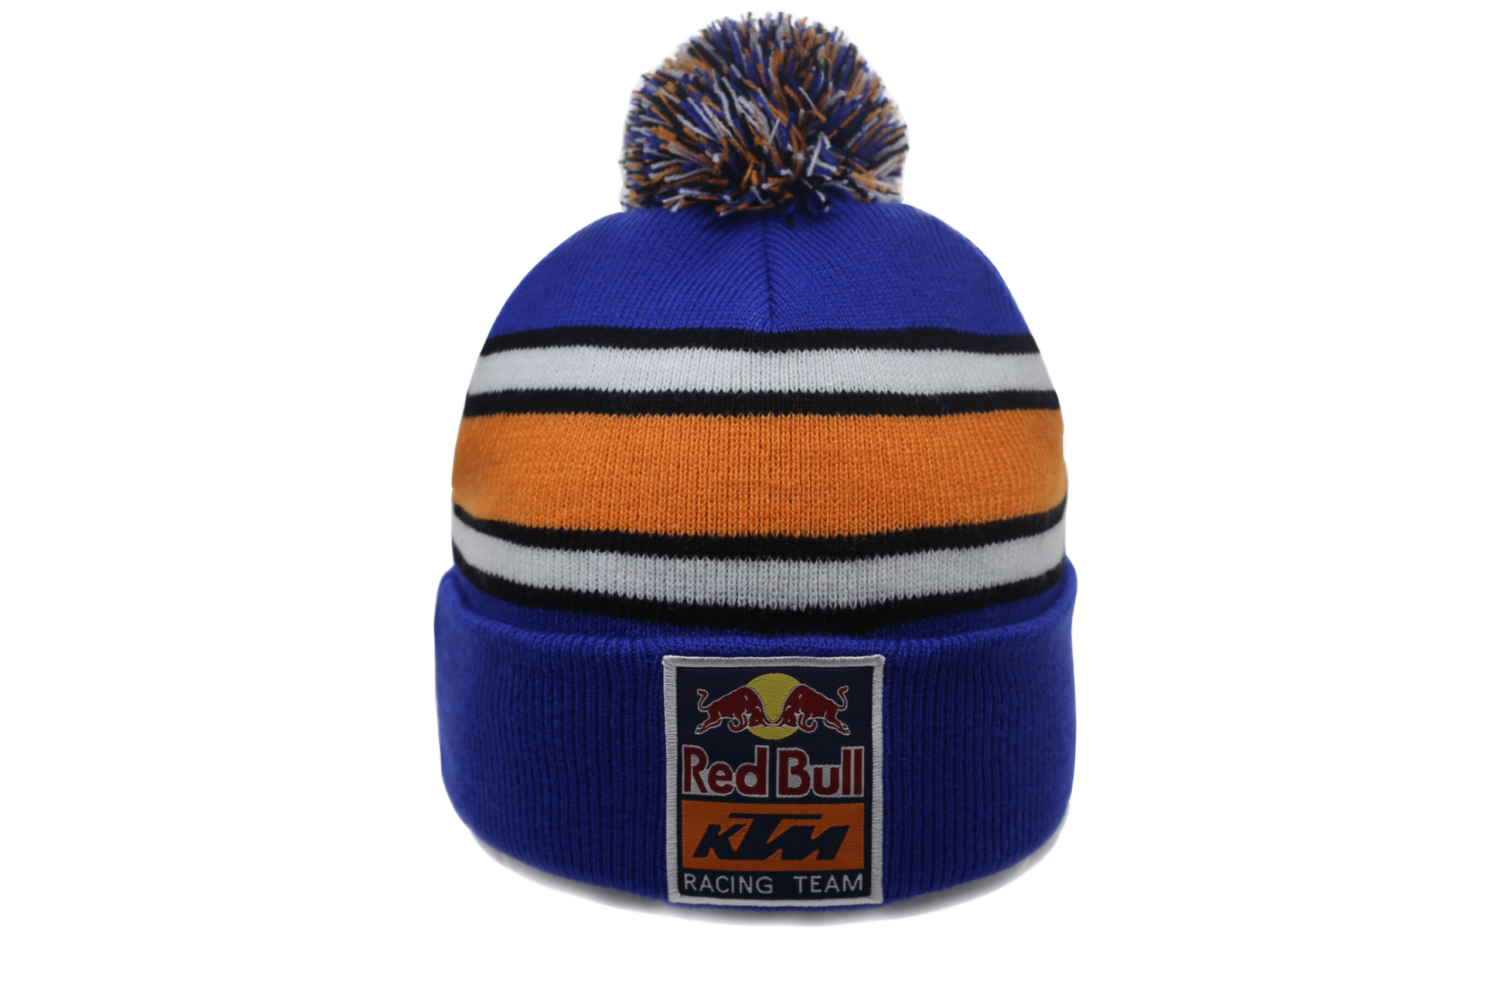 red-bull-ktm-popom-racing-team-orange-grey-blue-beanie-hat